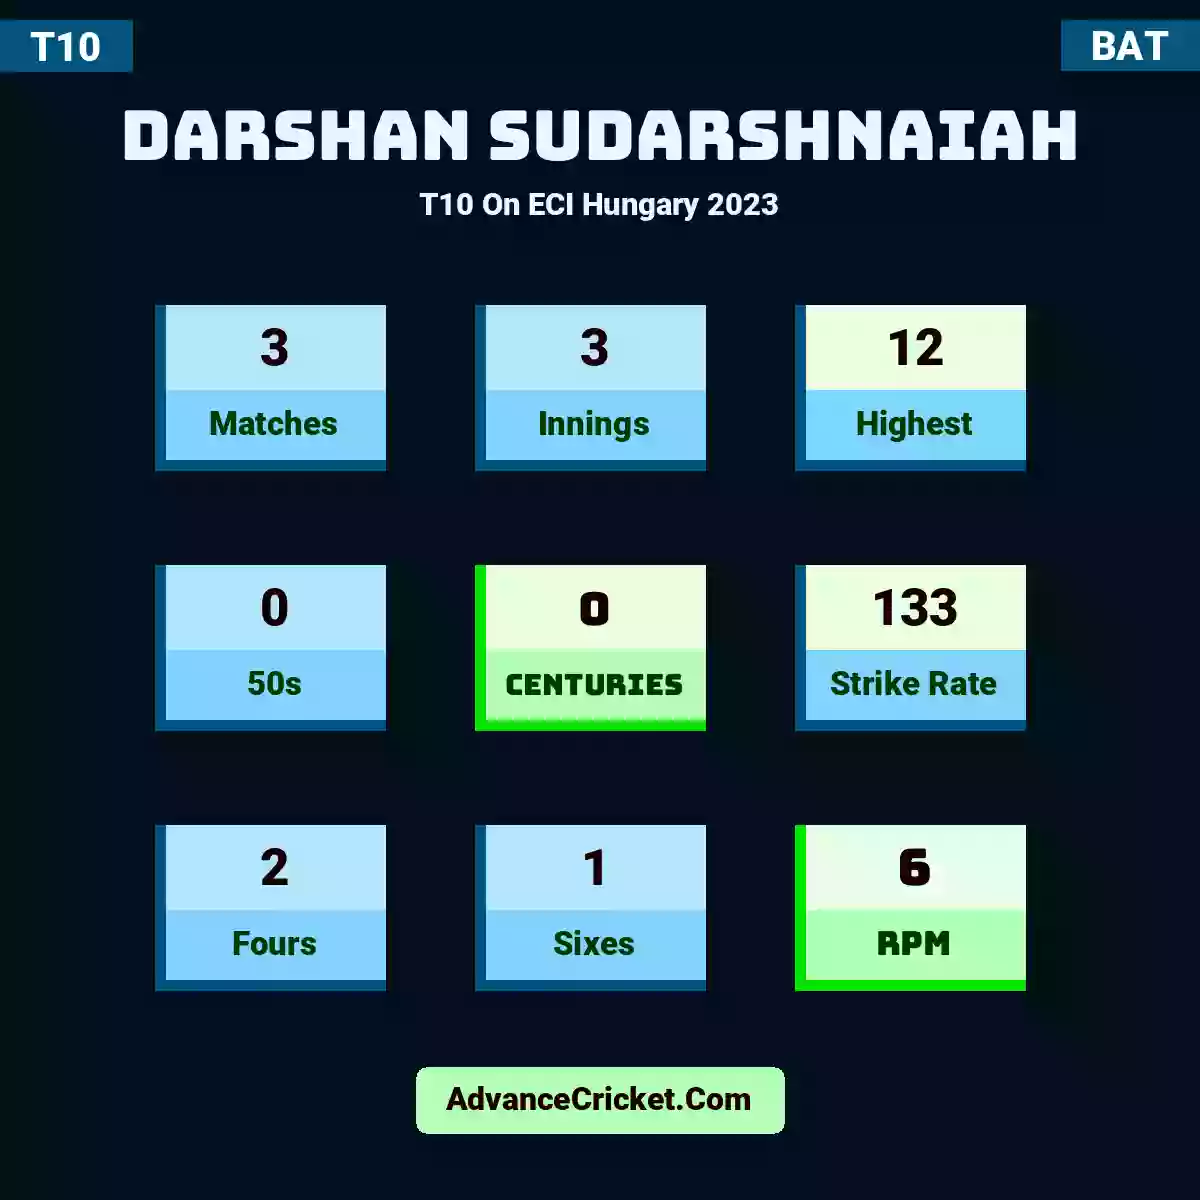 Darshan Sudarshnaiah T10  On ECI Hungary 2023, Darshan Sudarshnaiah played 3 matches, scored 12 runs as highest, 0 half-centuries, and 0 centuries, with a strike rate of 133. D.Sudarshnaiah hit 2 fours and 1 sixes, with an RPM of 6.